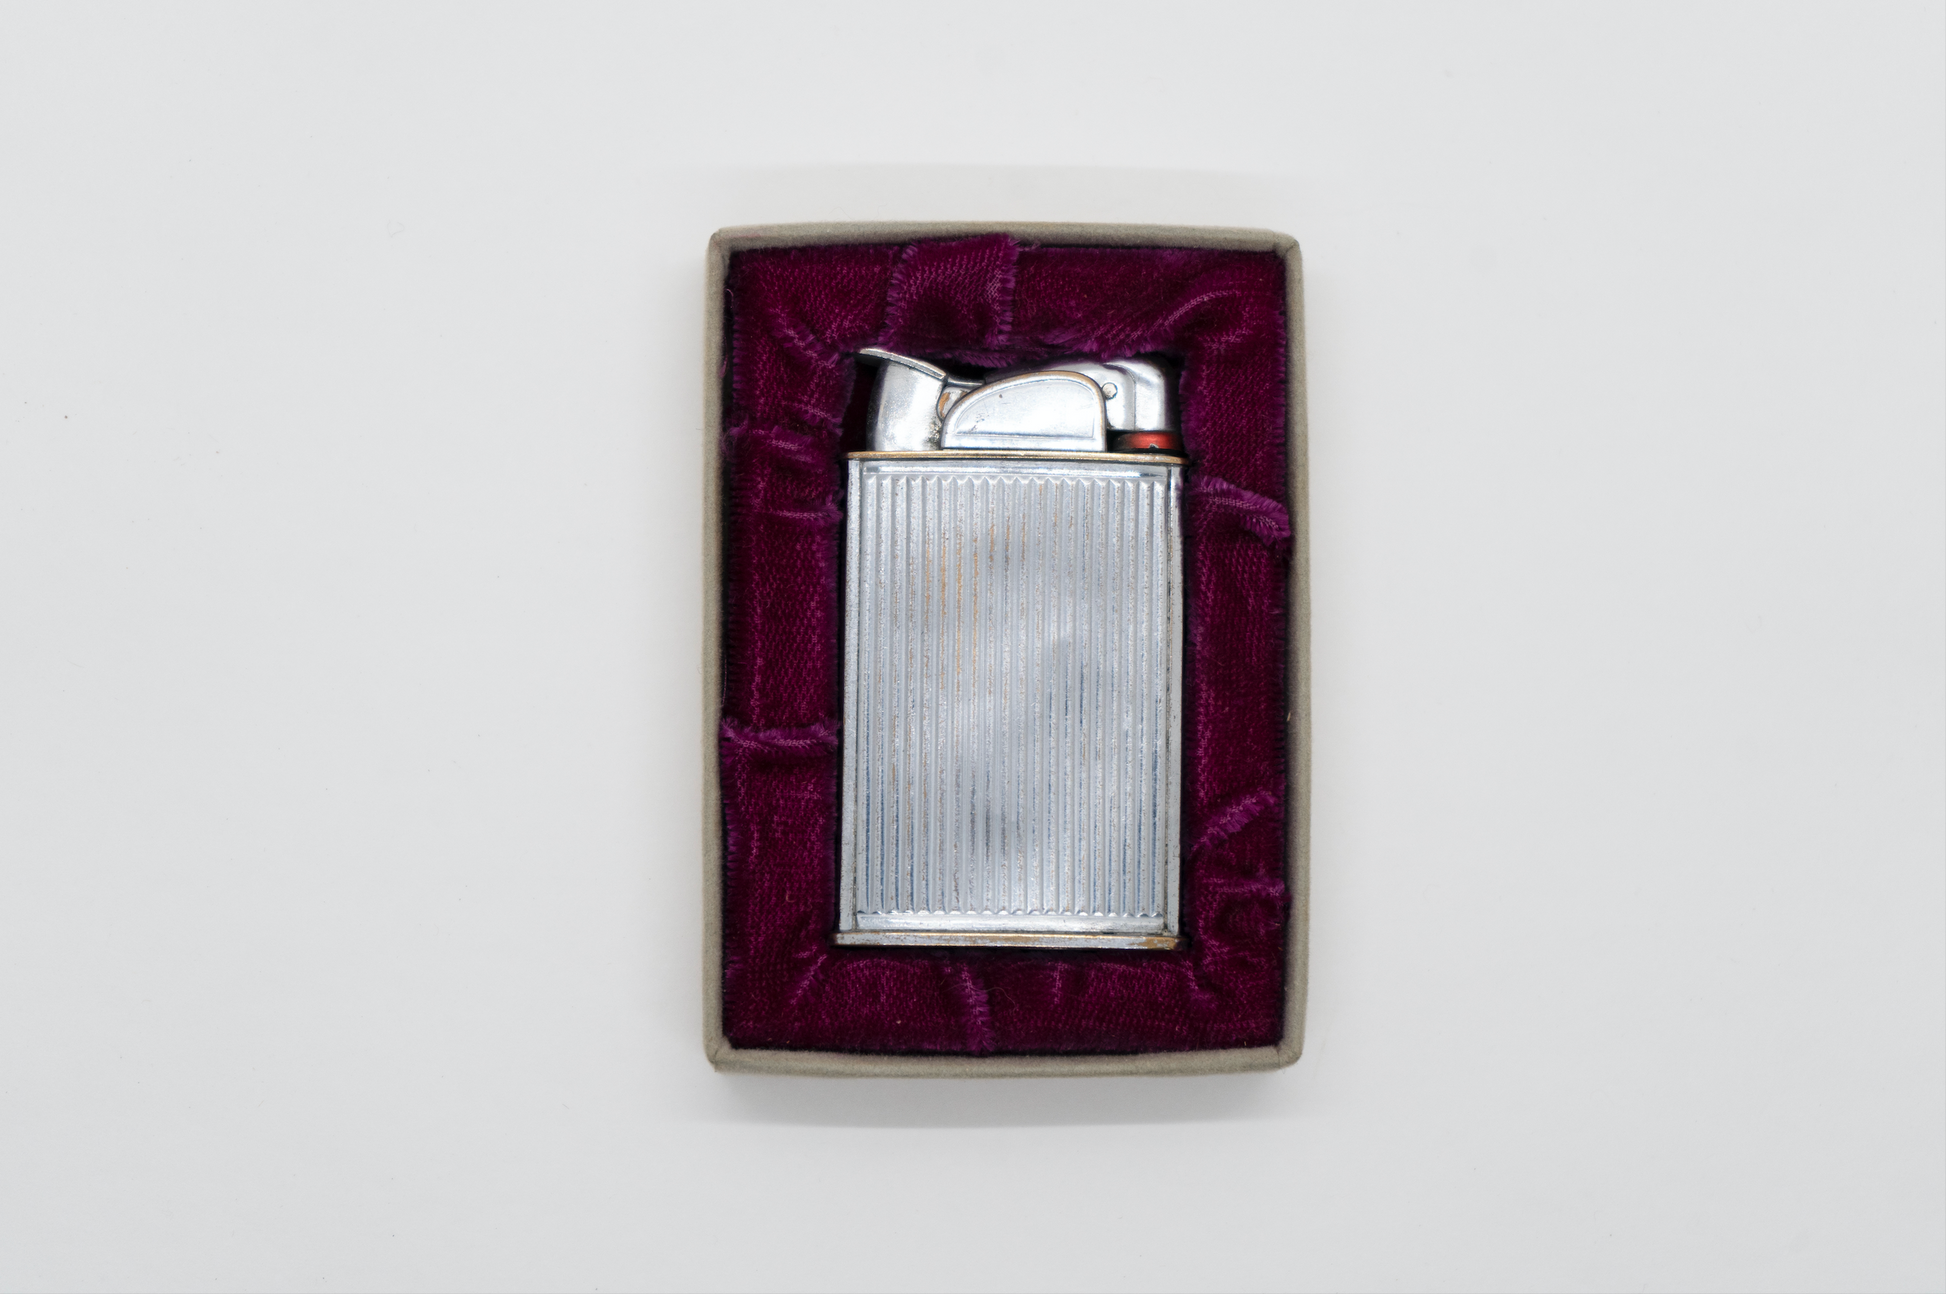 Louis Vuitton vintage lighter – Crafteza